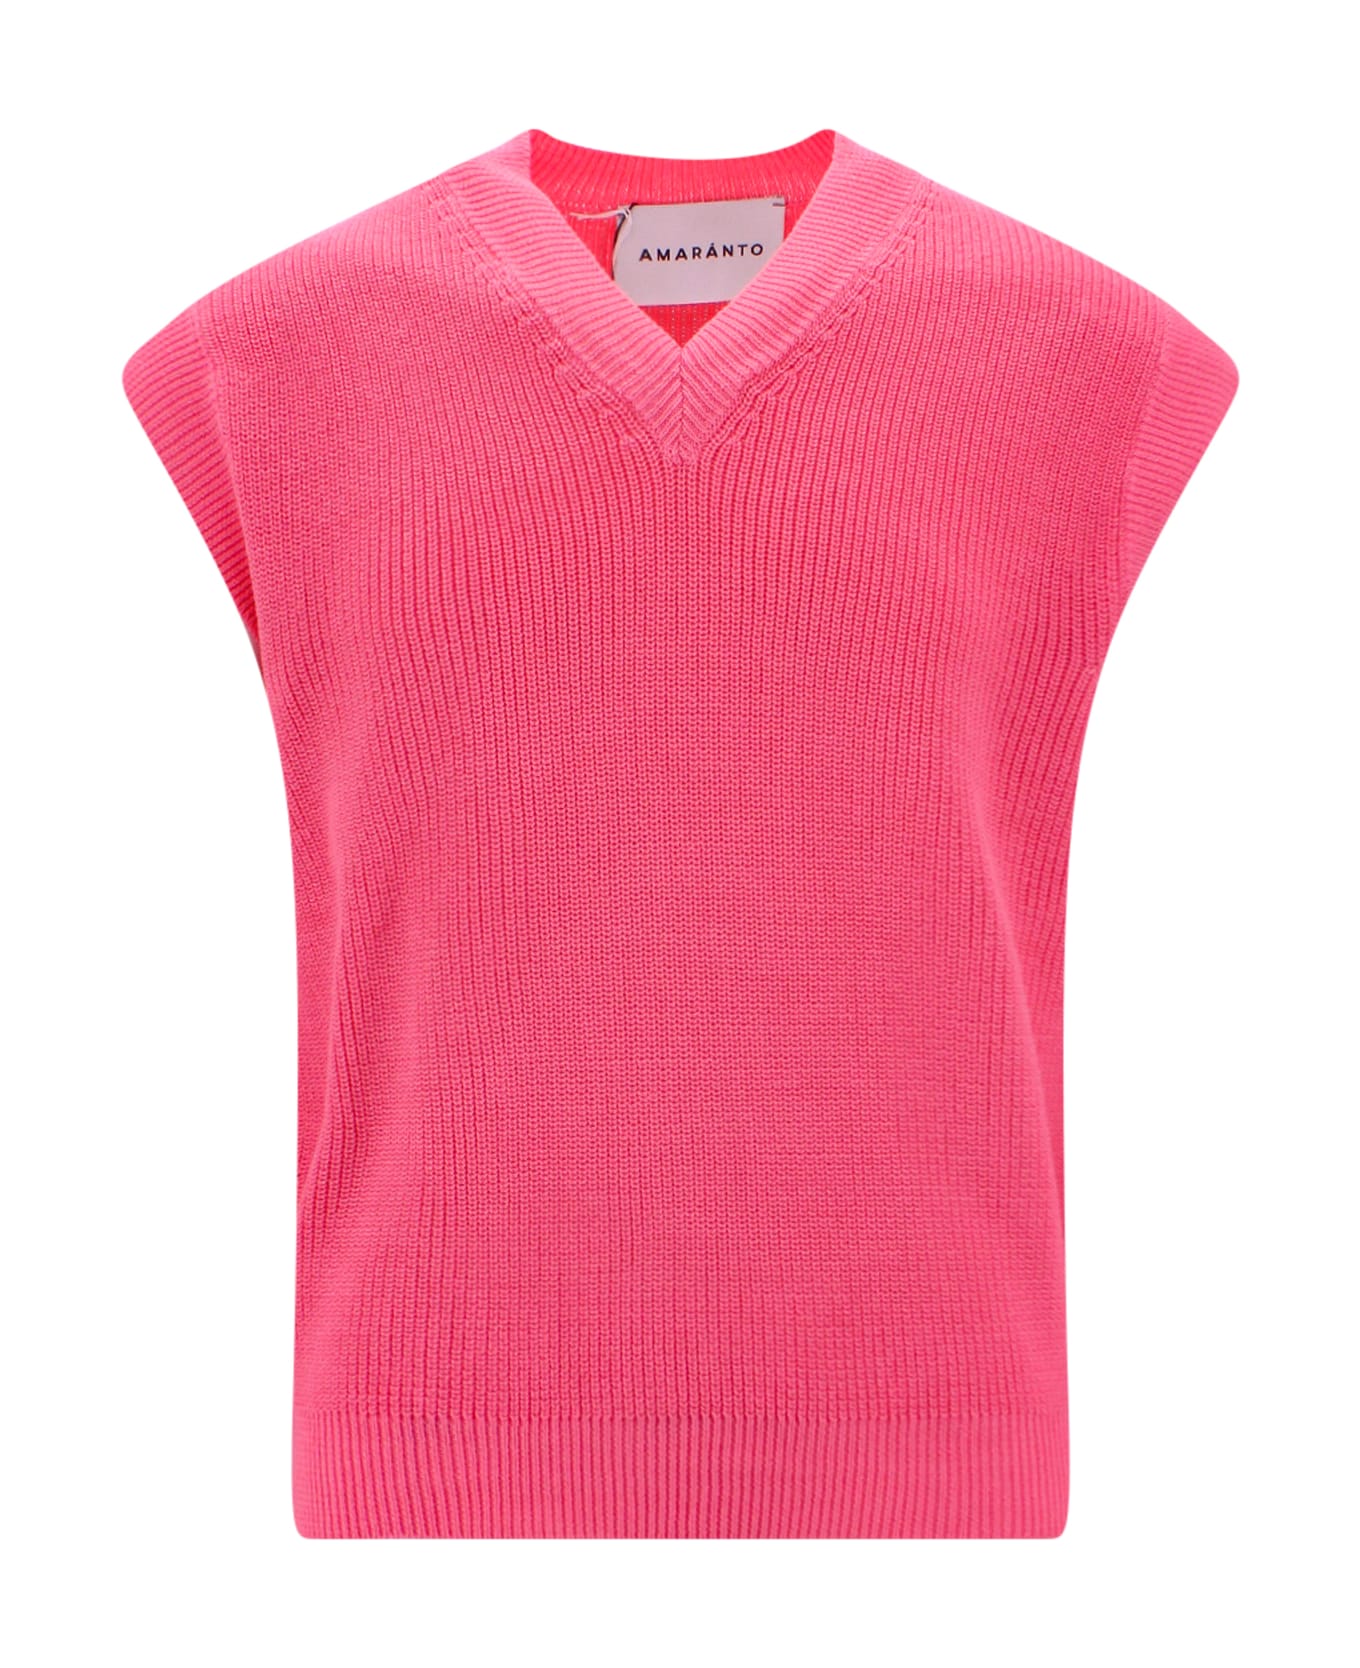 Amaranto Vest - Pink ベスト